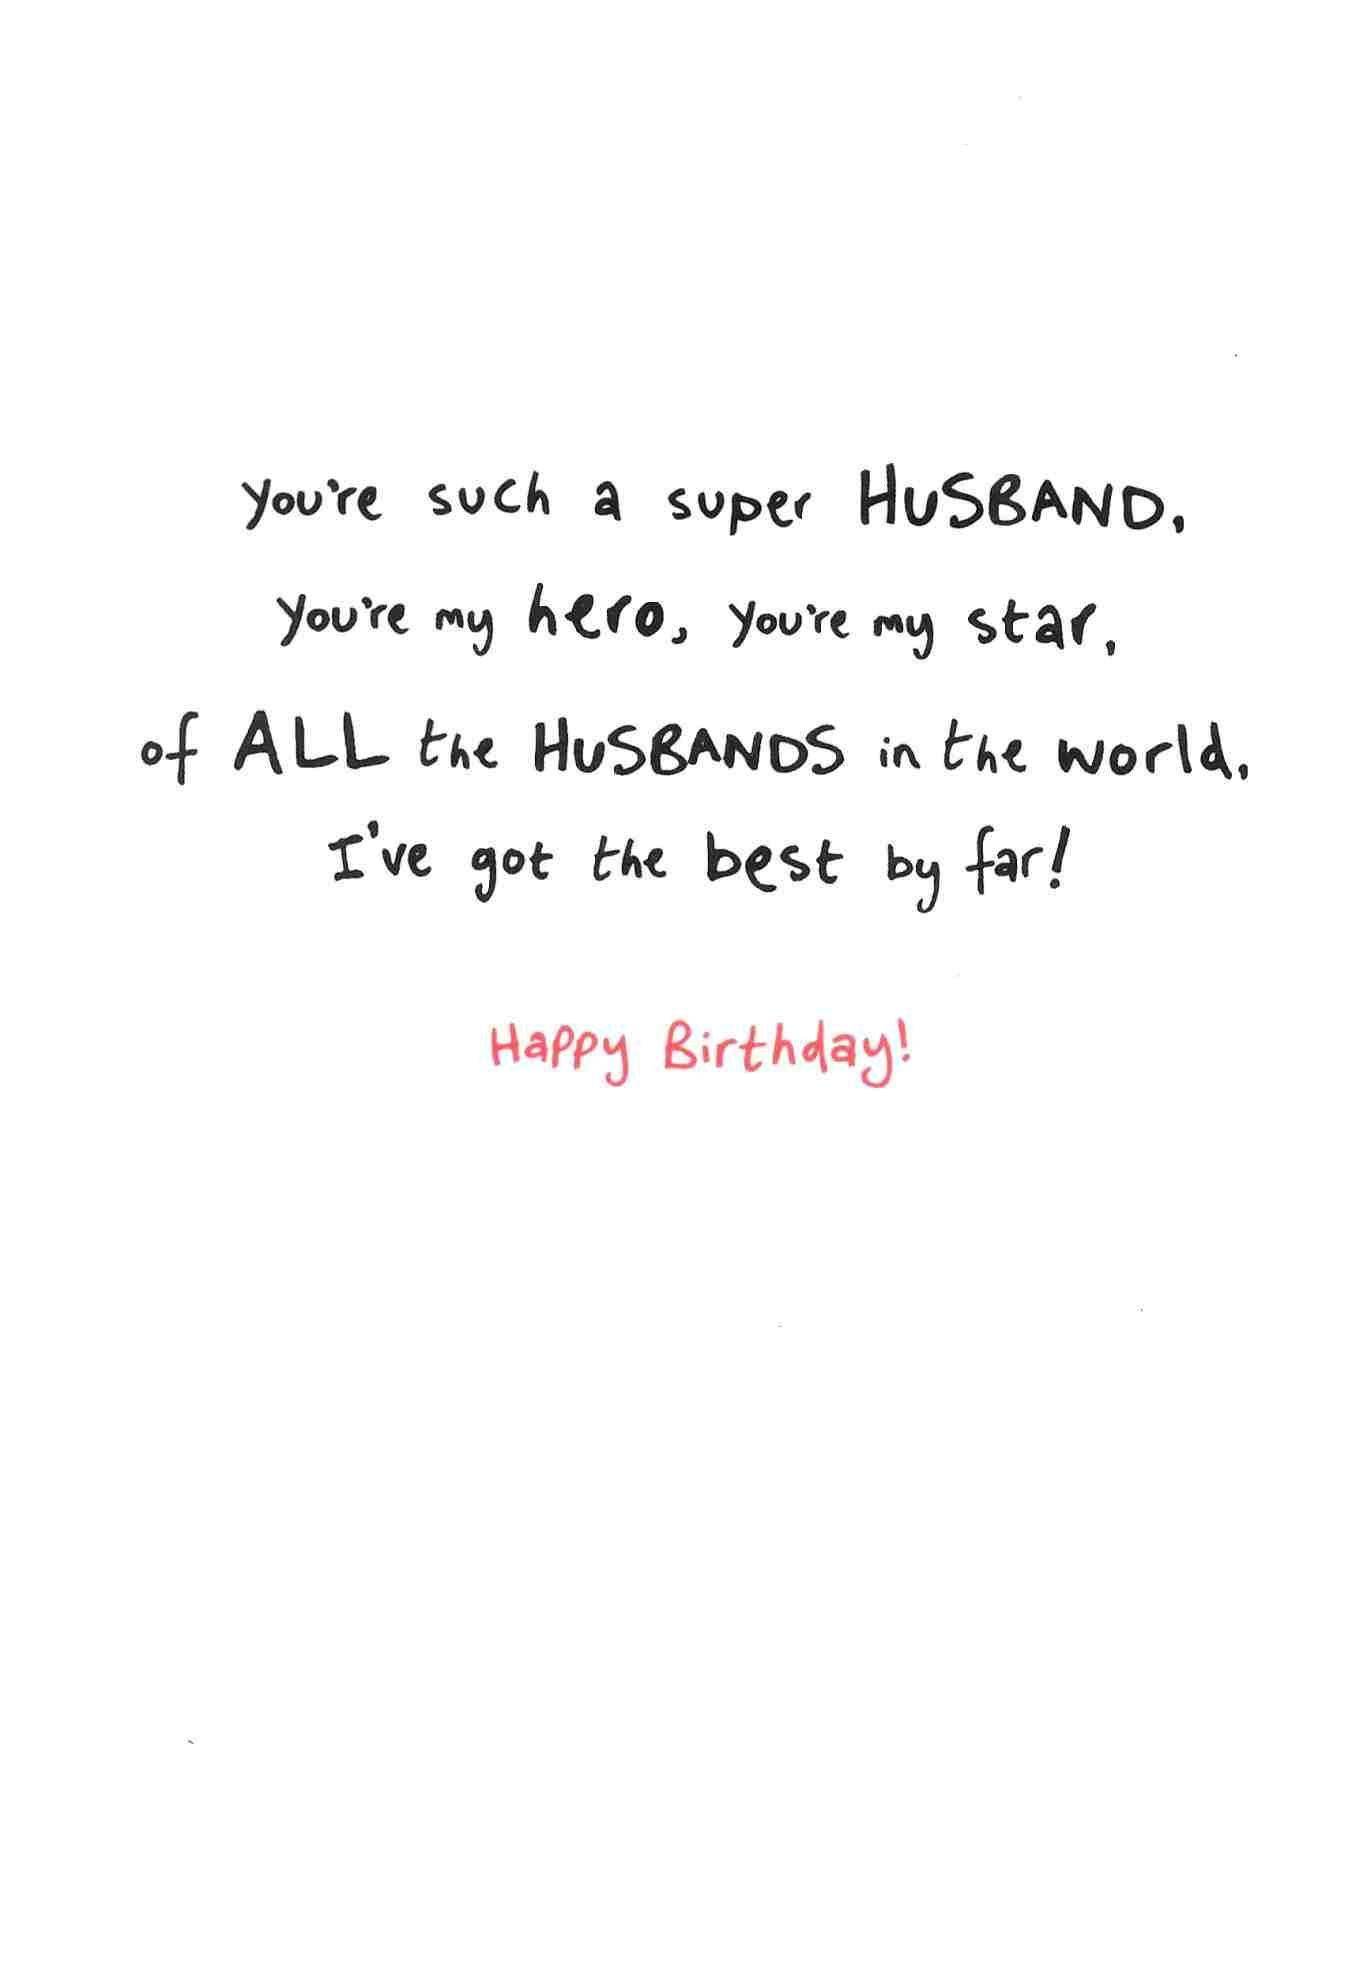 husband birthday wish